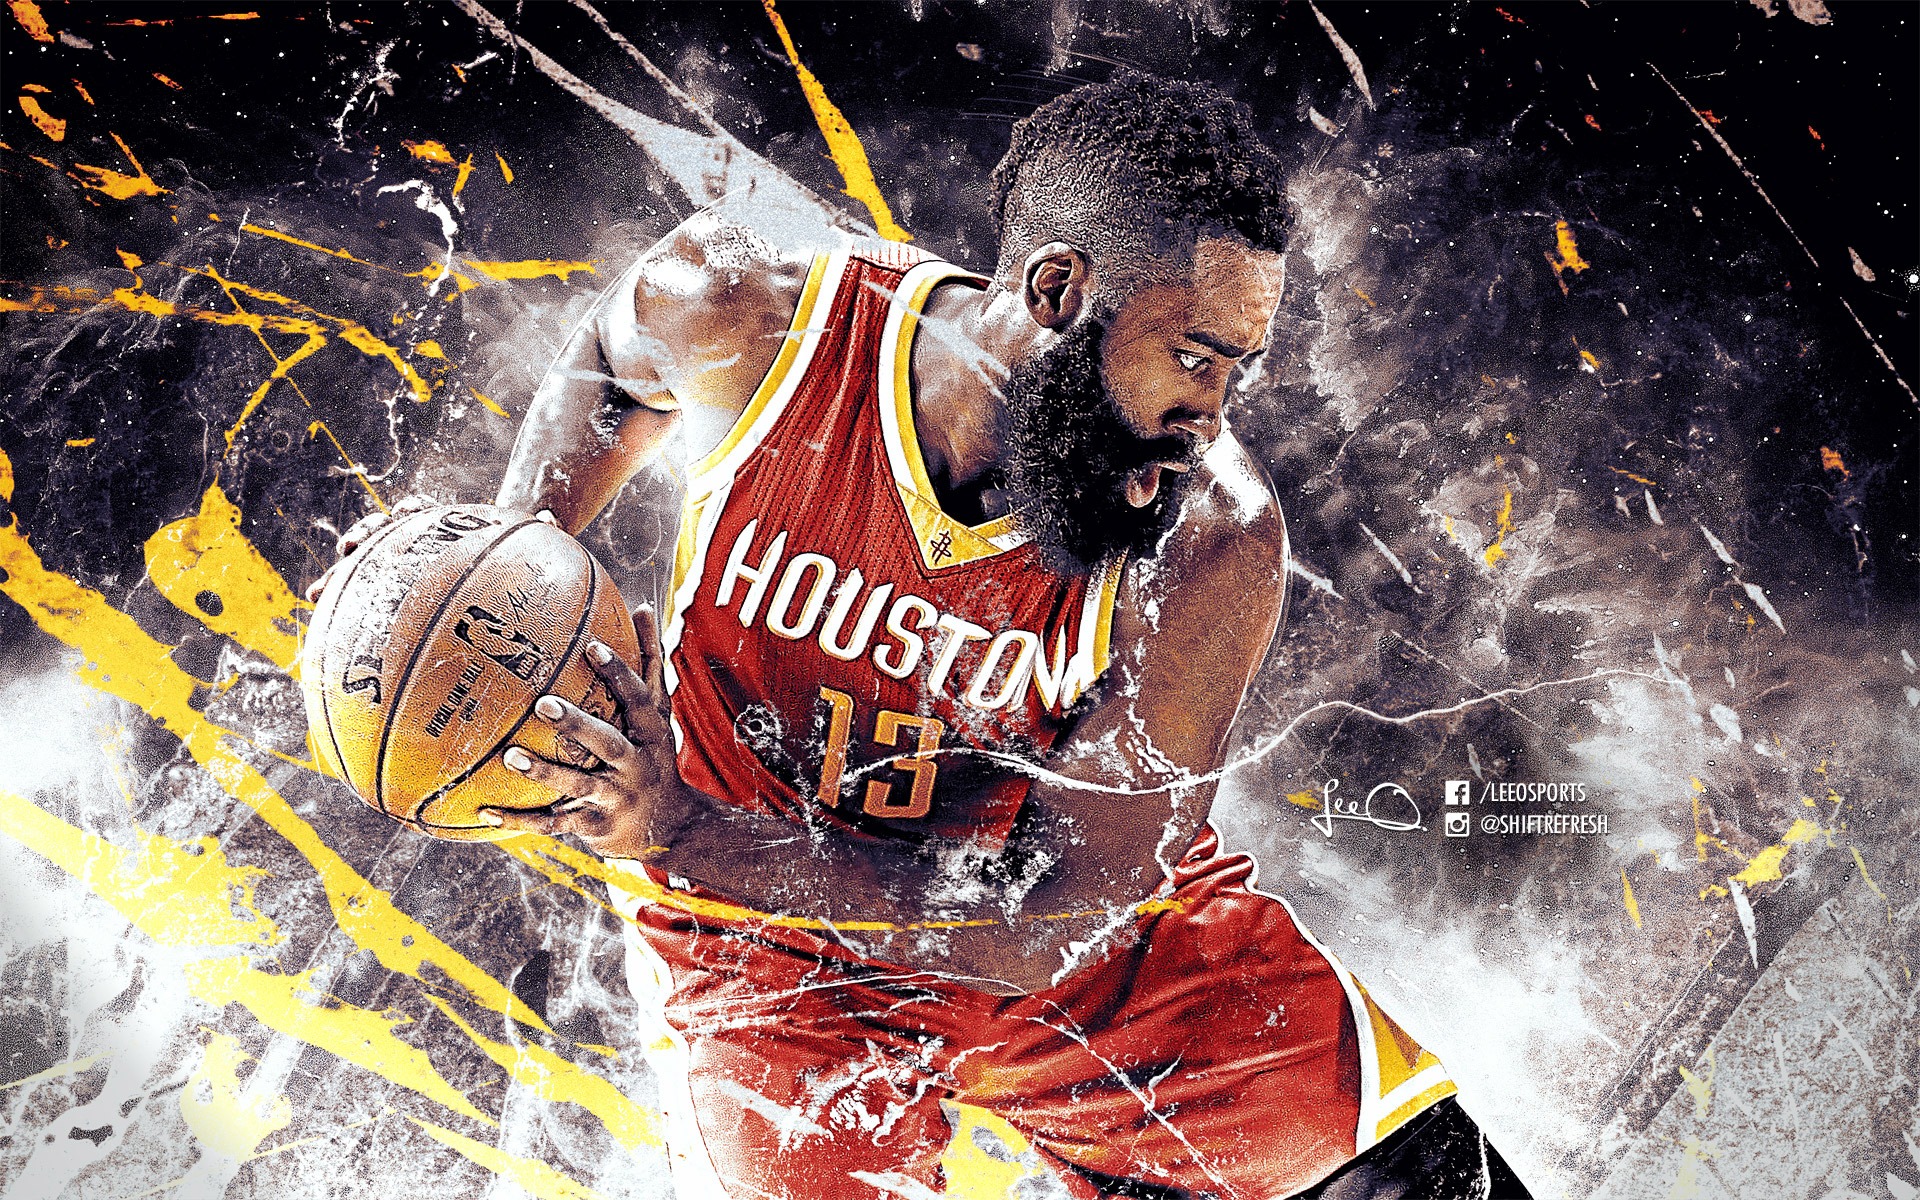 Houston Rockets 2018 Wallpapers